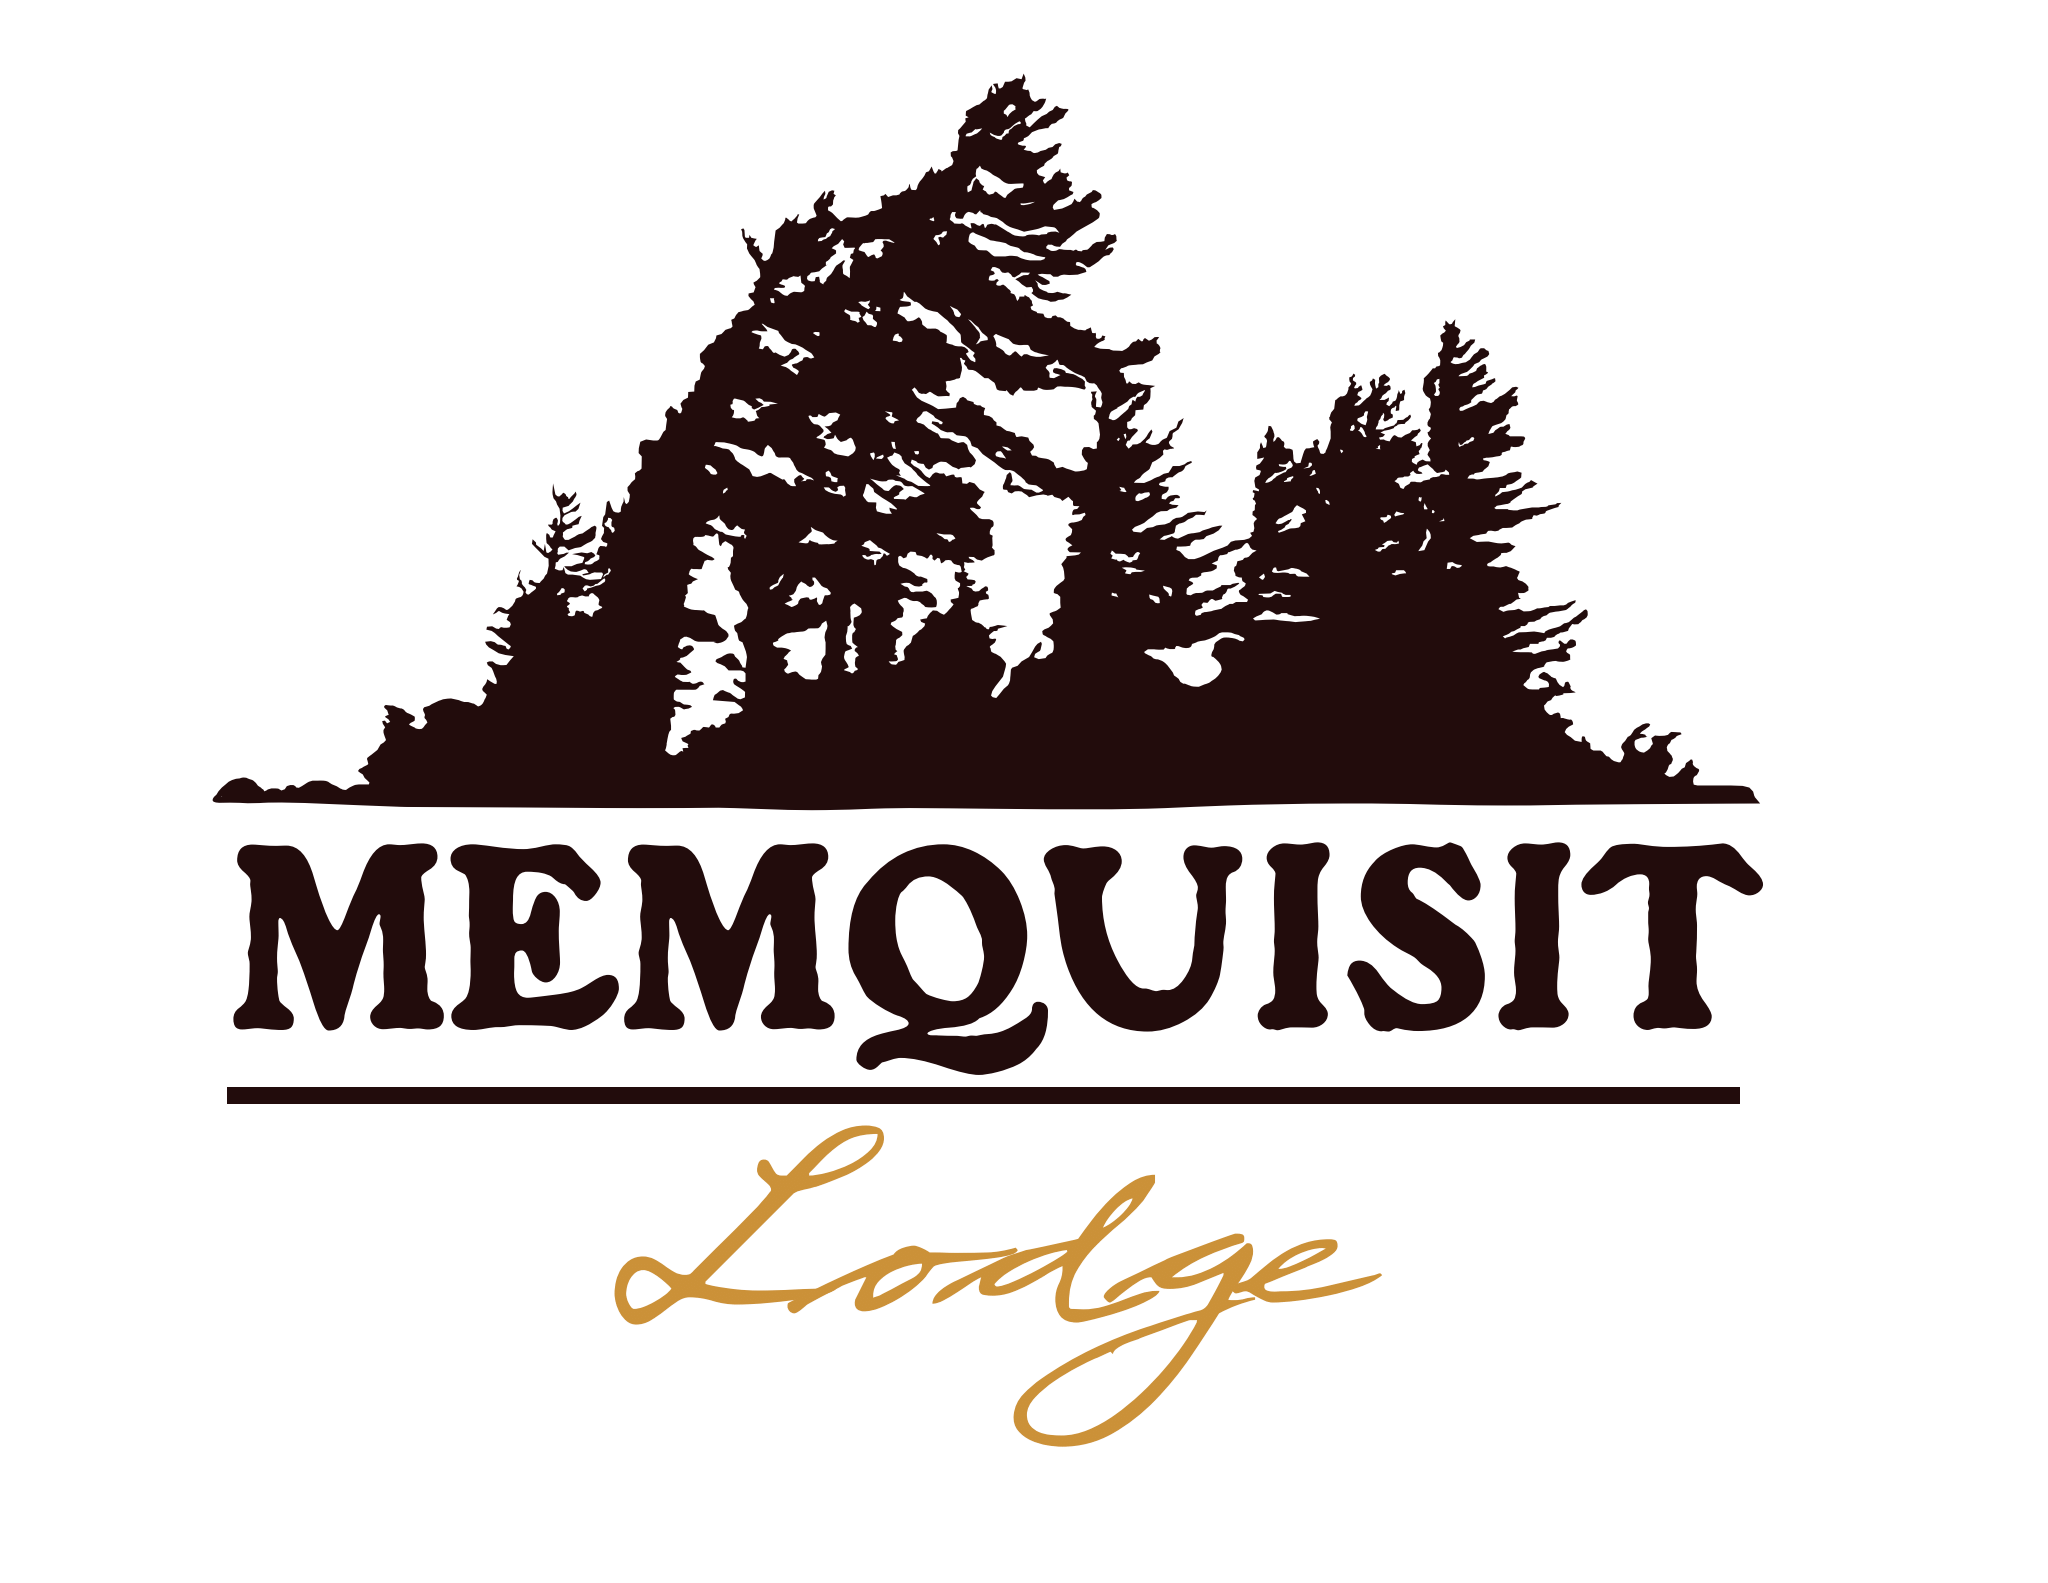 Memquisit Lodge Limited